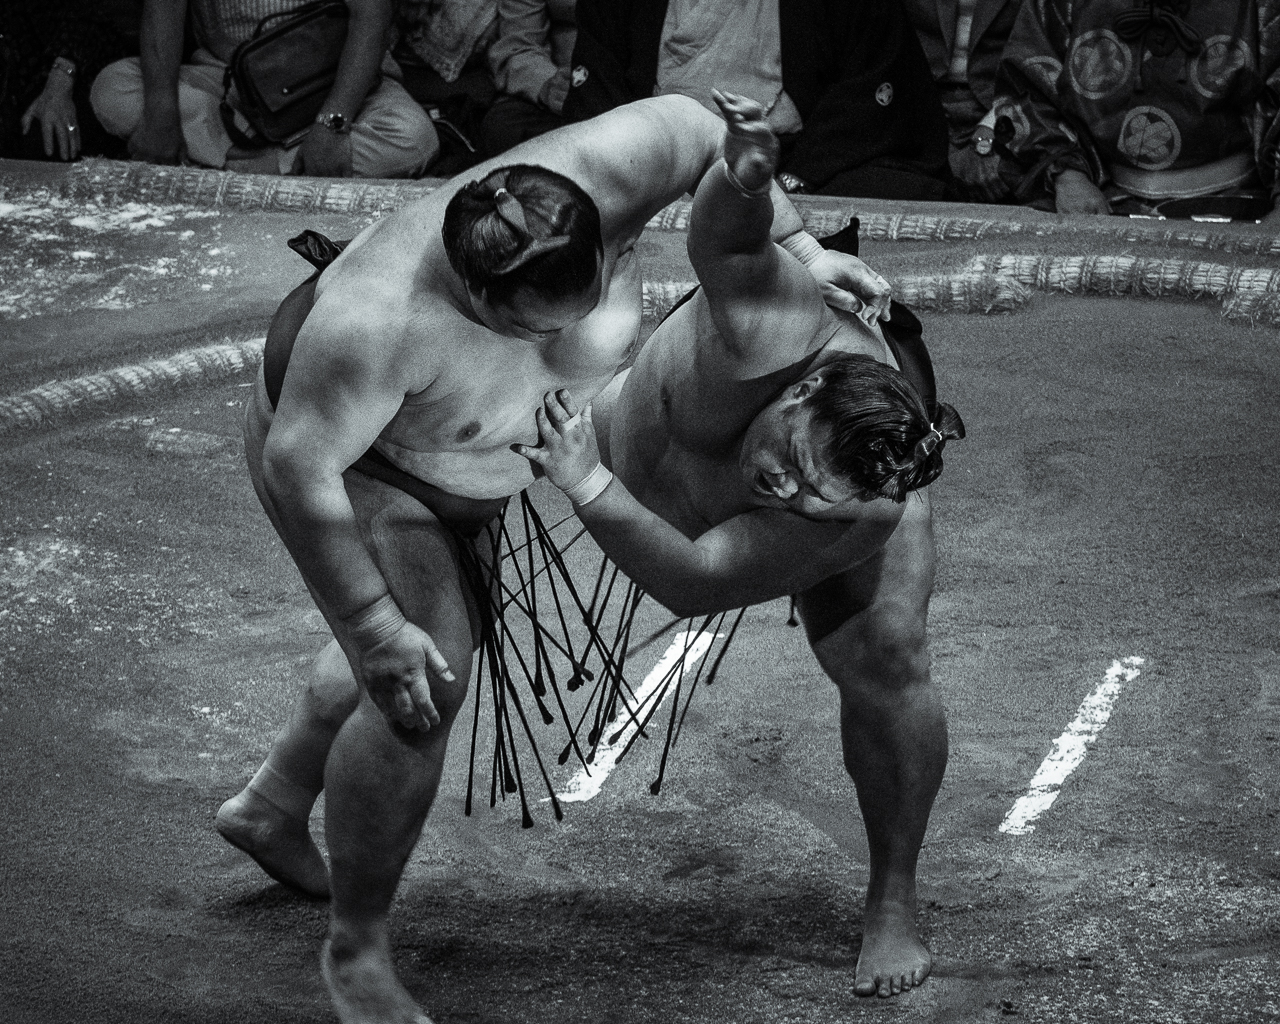 Japan travel photography: Sumo wrestlers at the 2018 Sumo Championship, Ryogoku Kokugikan national stadium, Tokyo, Japan.